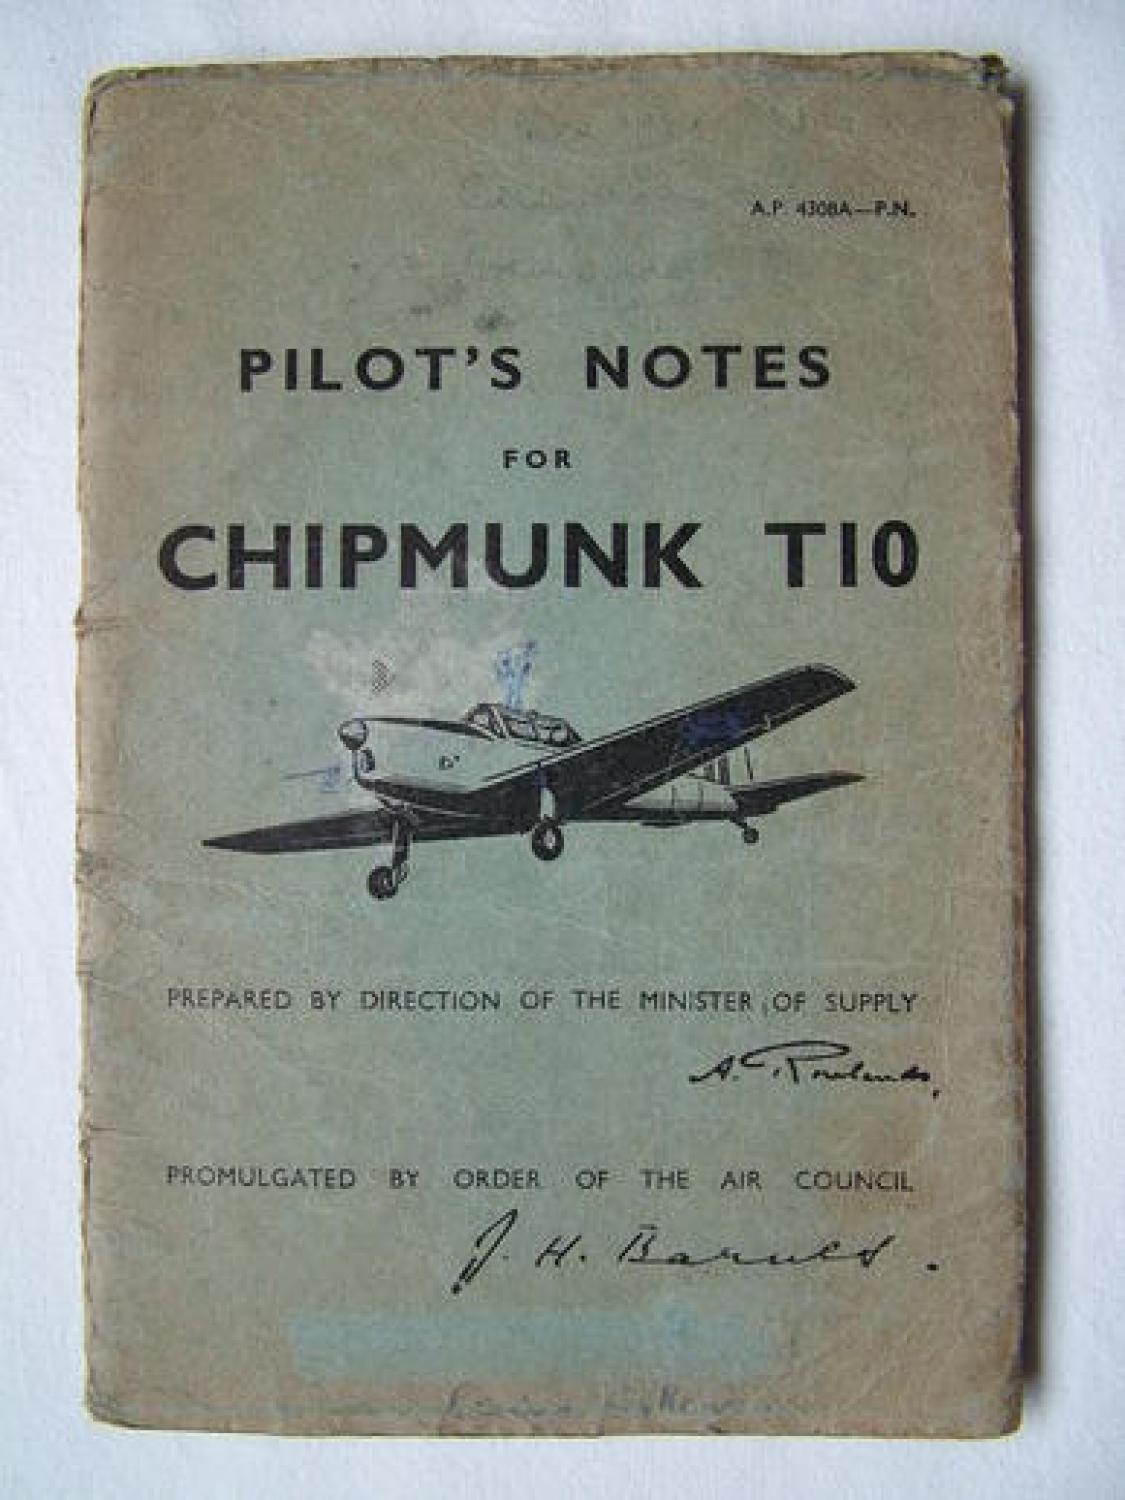 R.A.F. Pilot's Notes - Chipmunk T10